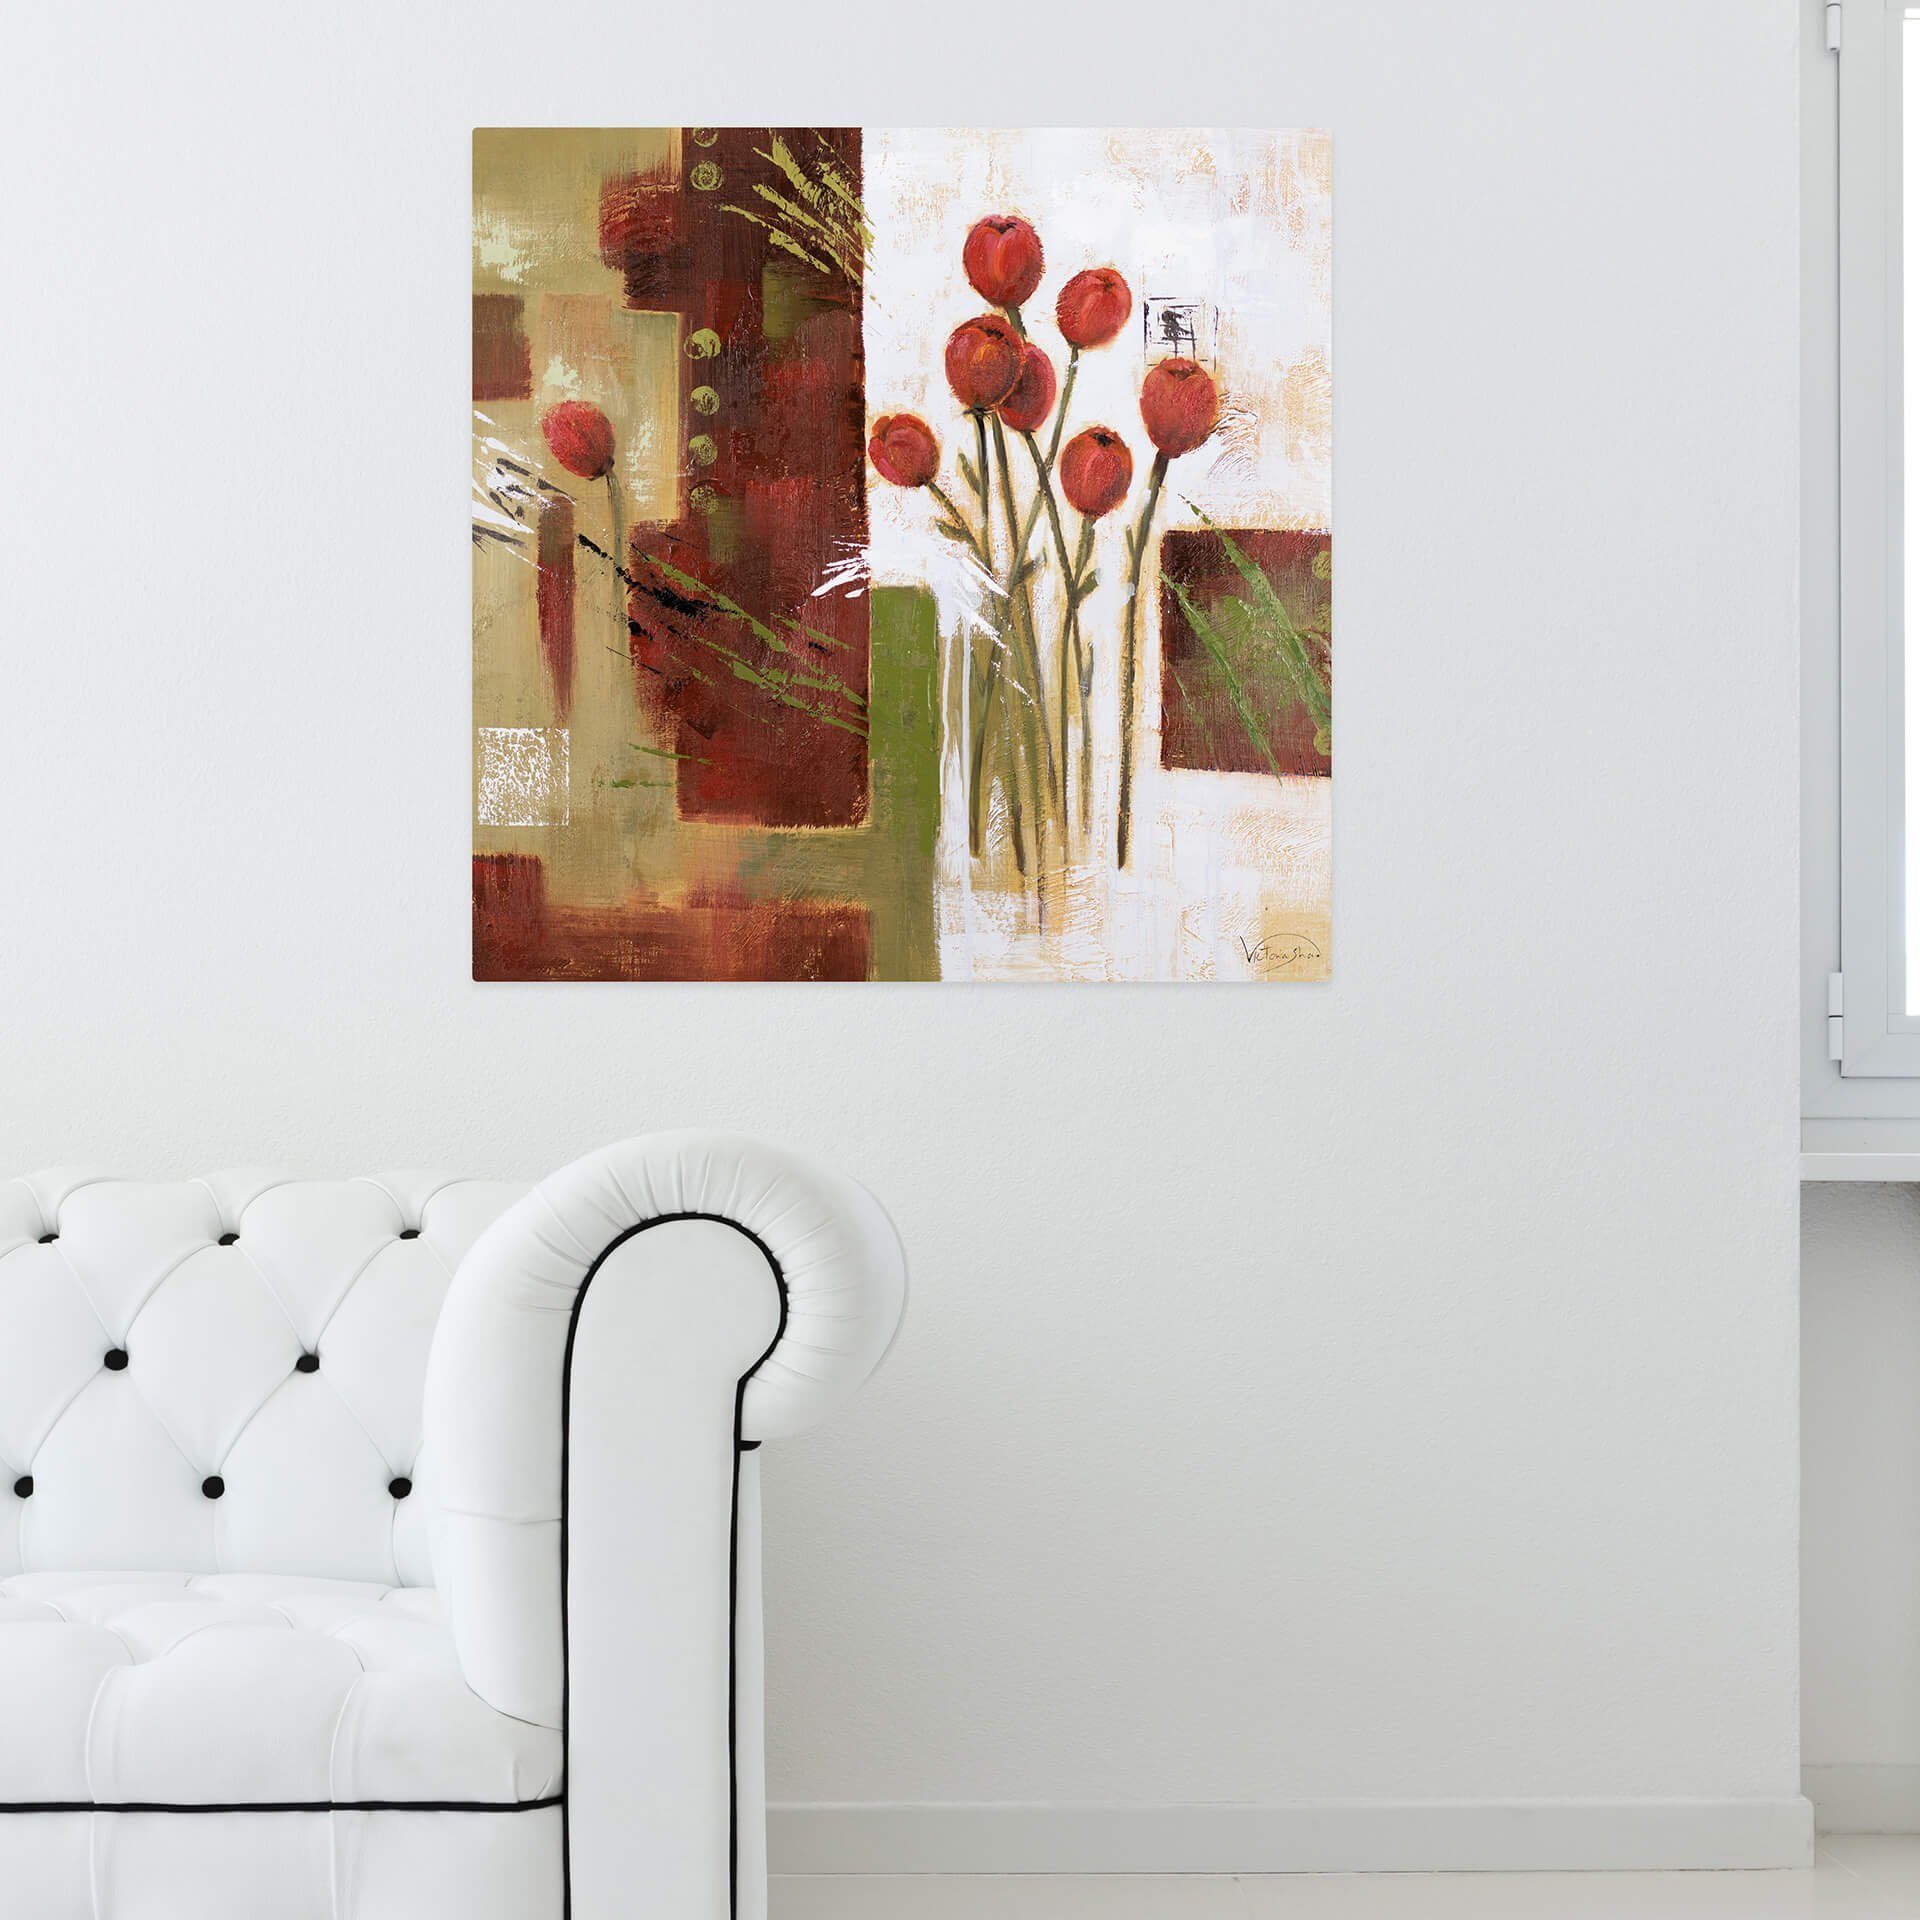 80x80 Red Velvet Wohnzimmer 100% KUNSTLOFT Gemälde HANDGEMALT Wandbild cm, Leinwandbild